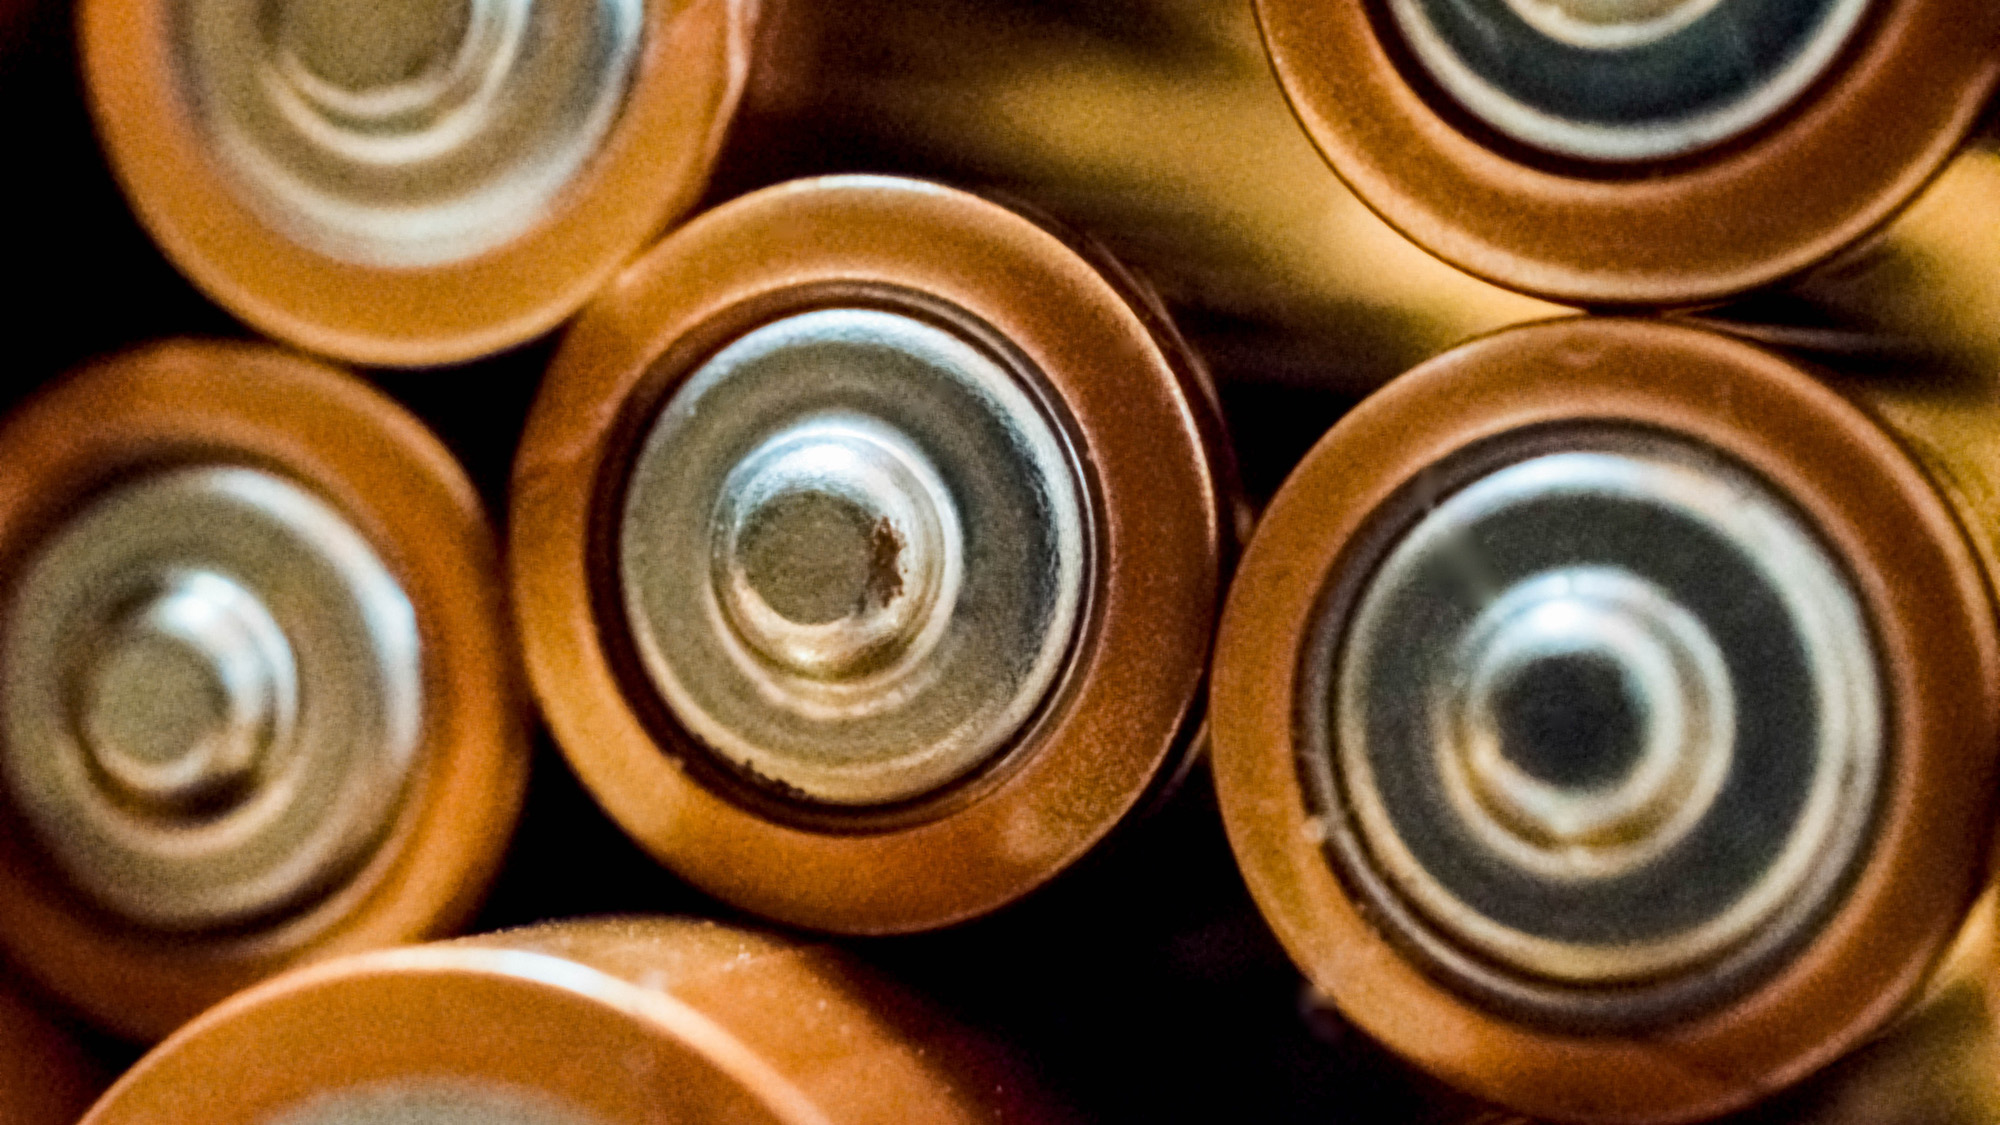 https://www.popsci.com/uploads/2023/01/31/how-to-turn-AAA-batteries-into-AA-batteries.jpg?auto=webp